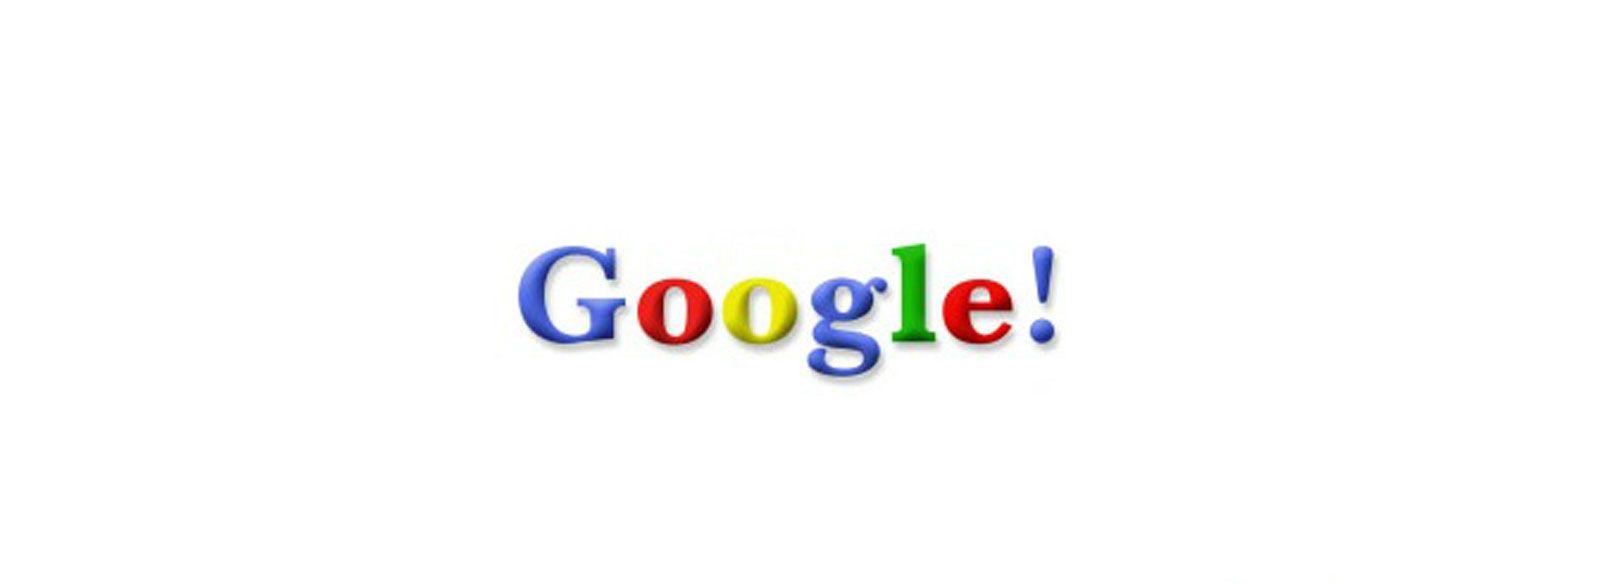 Previous Google Logo - Google Proves That Logos Need Regular Update - Blogs